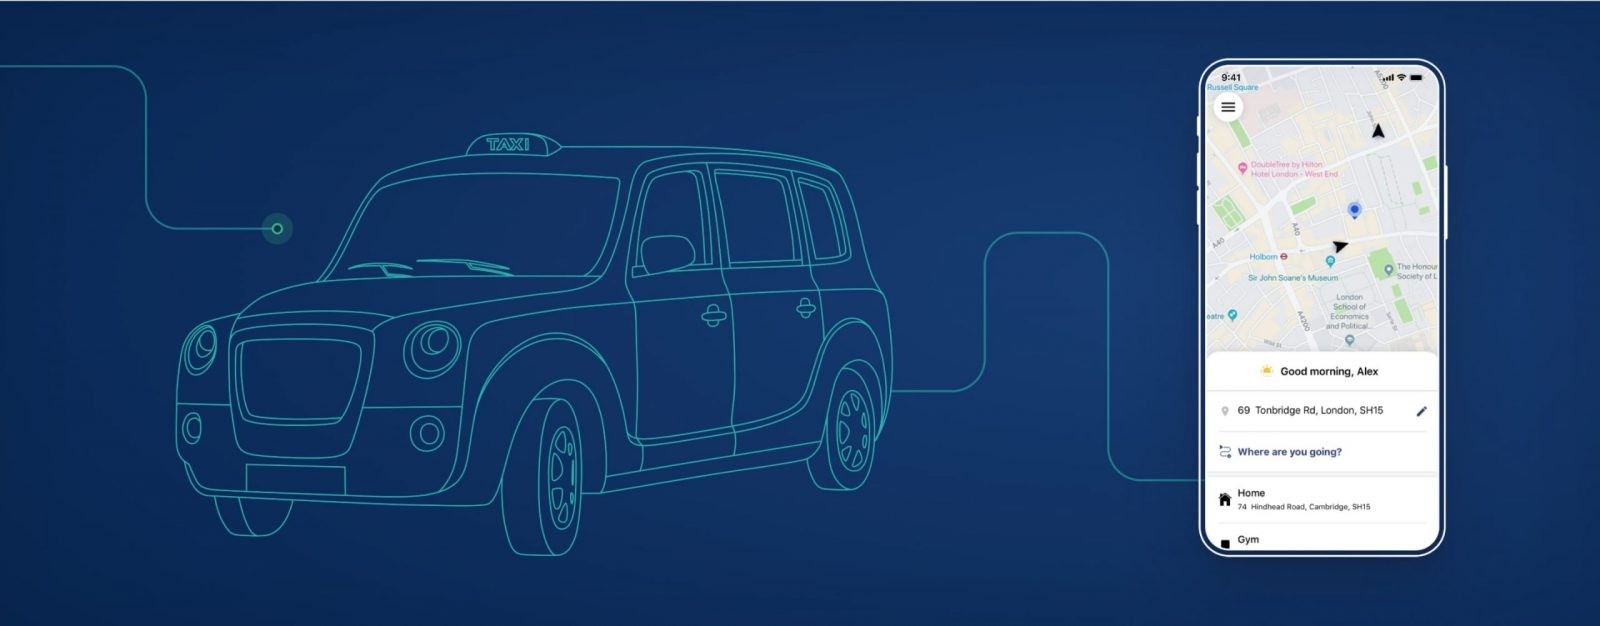 Cordic Passenger — a Cross-Platform Taxi App for Instant Ride Requests in UK Platform Taxi App for Instant Ride Requests in UK Platform Taxi App for Instant Ride Requests in UK ordic Passengers &#8211; Artkai